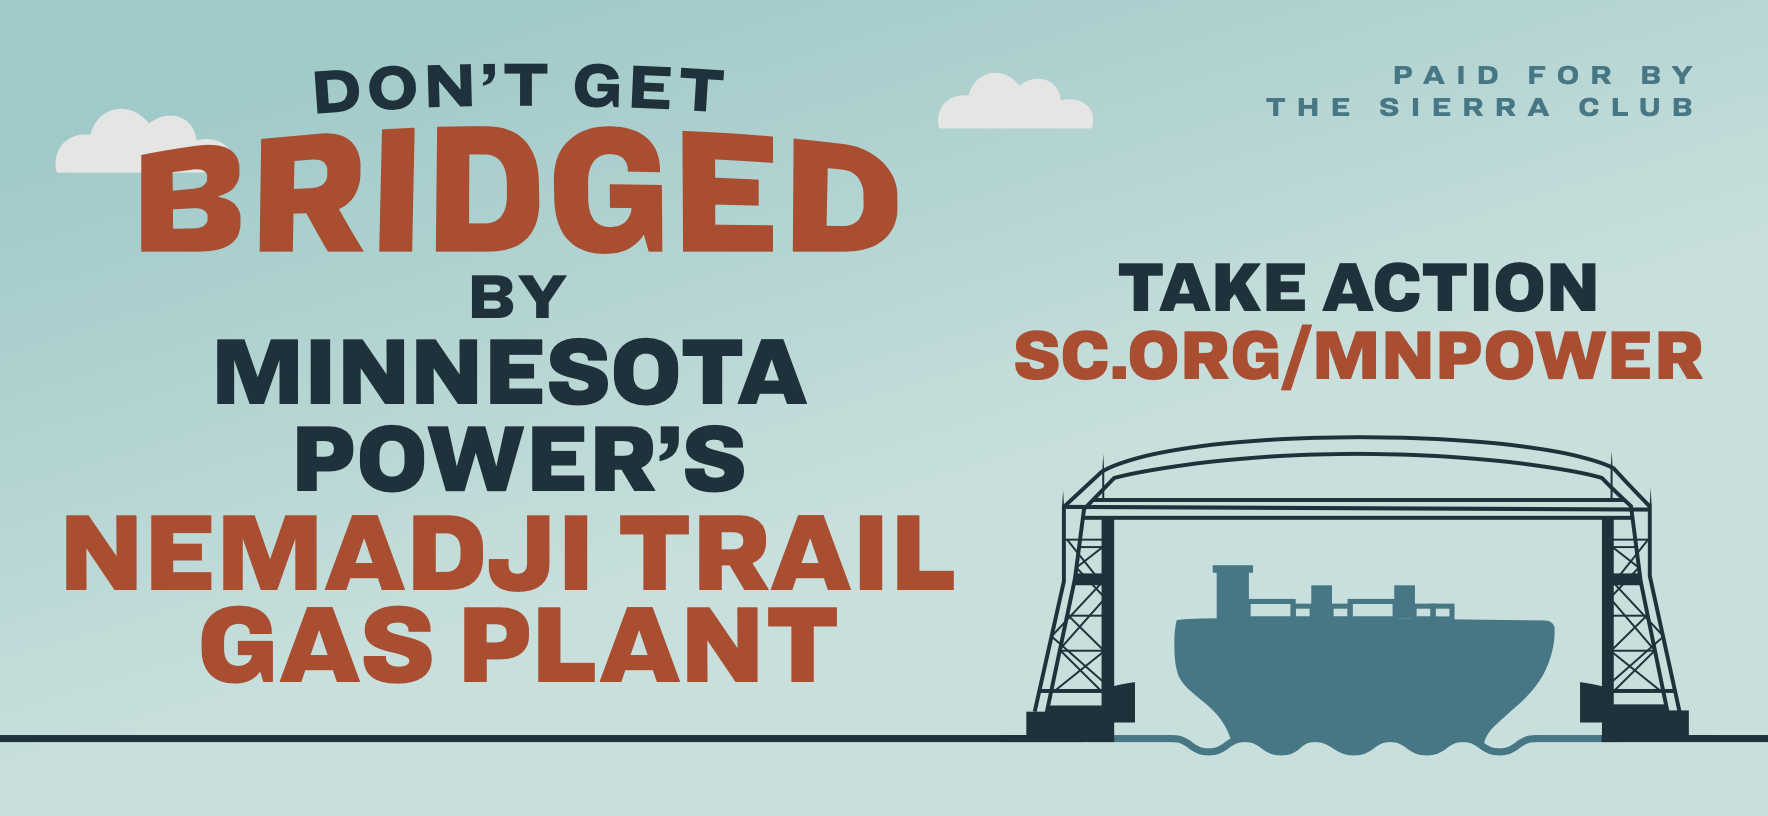 The Don't Get Bridged by Minnesota Power billboard